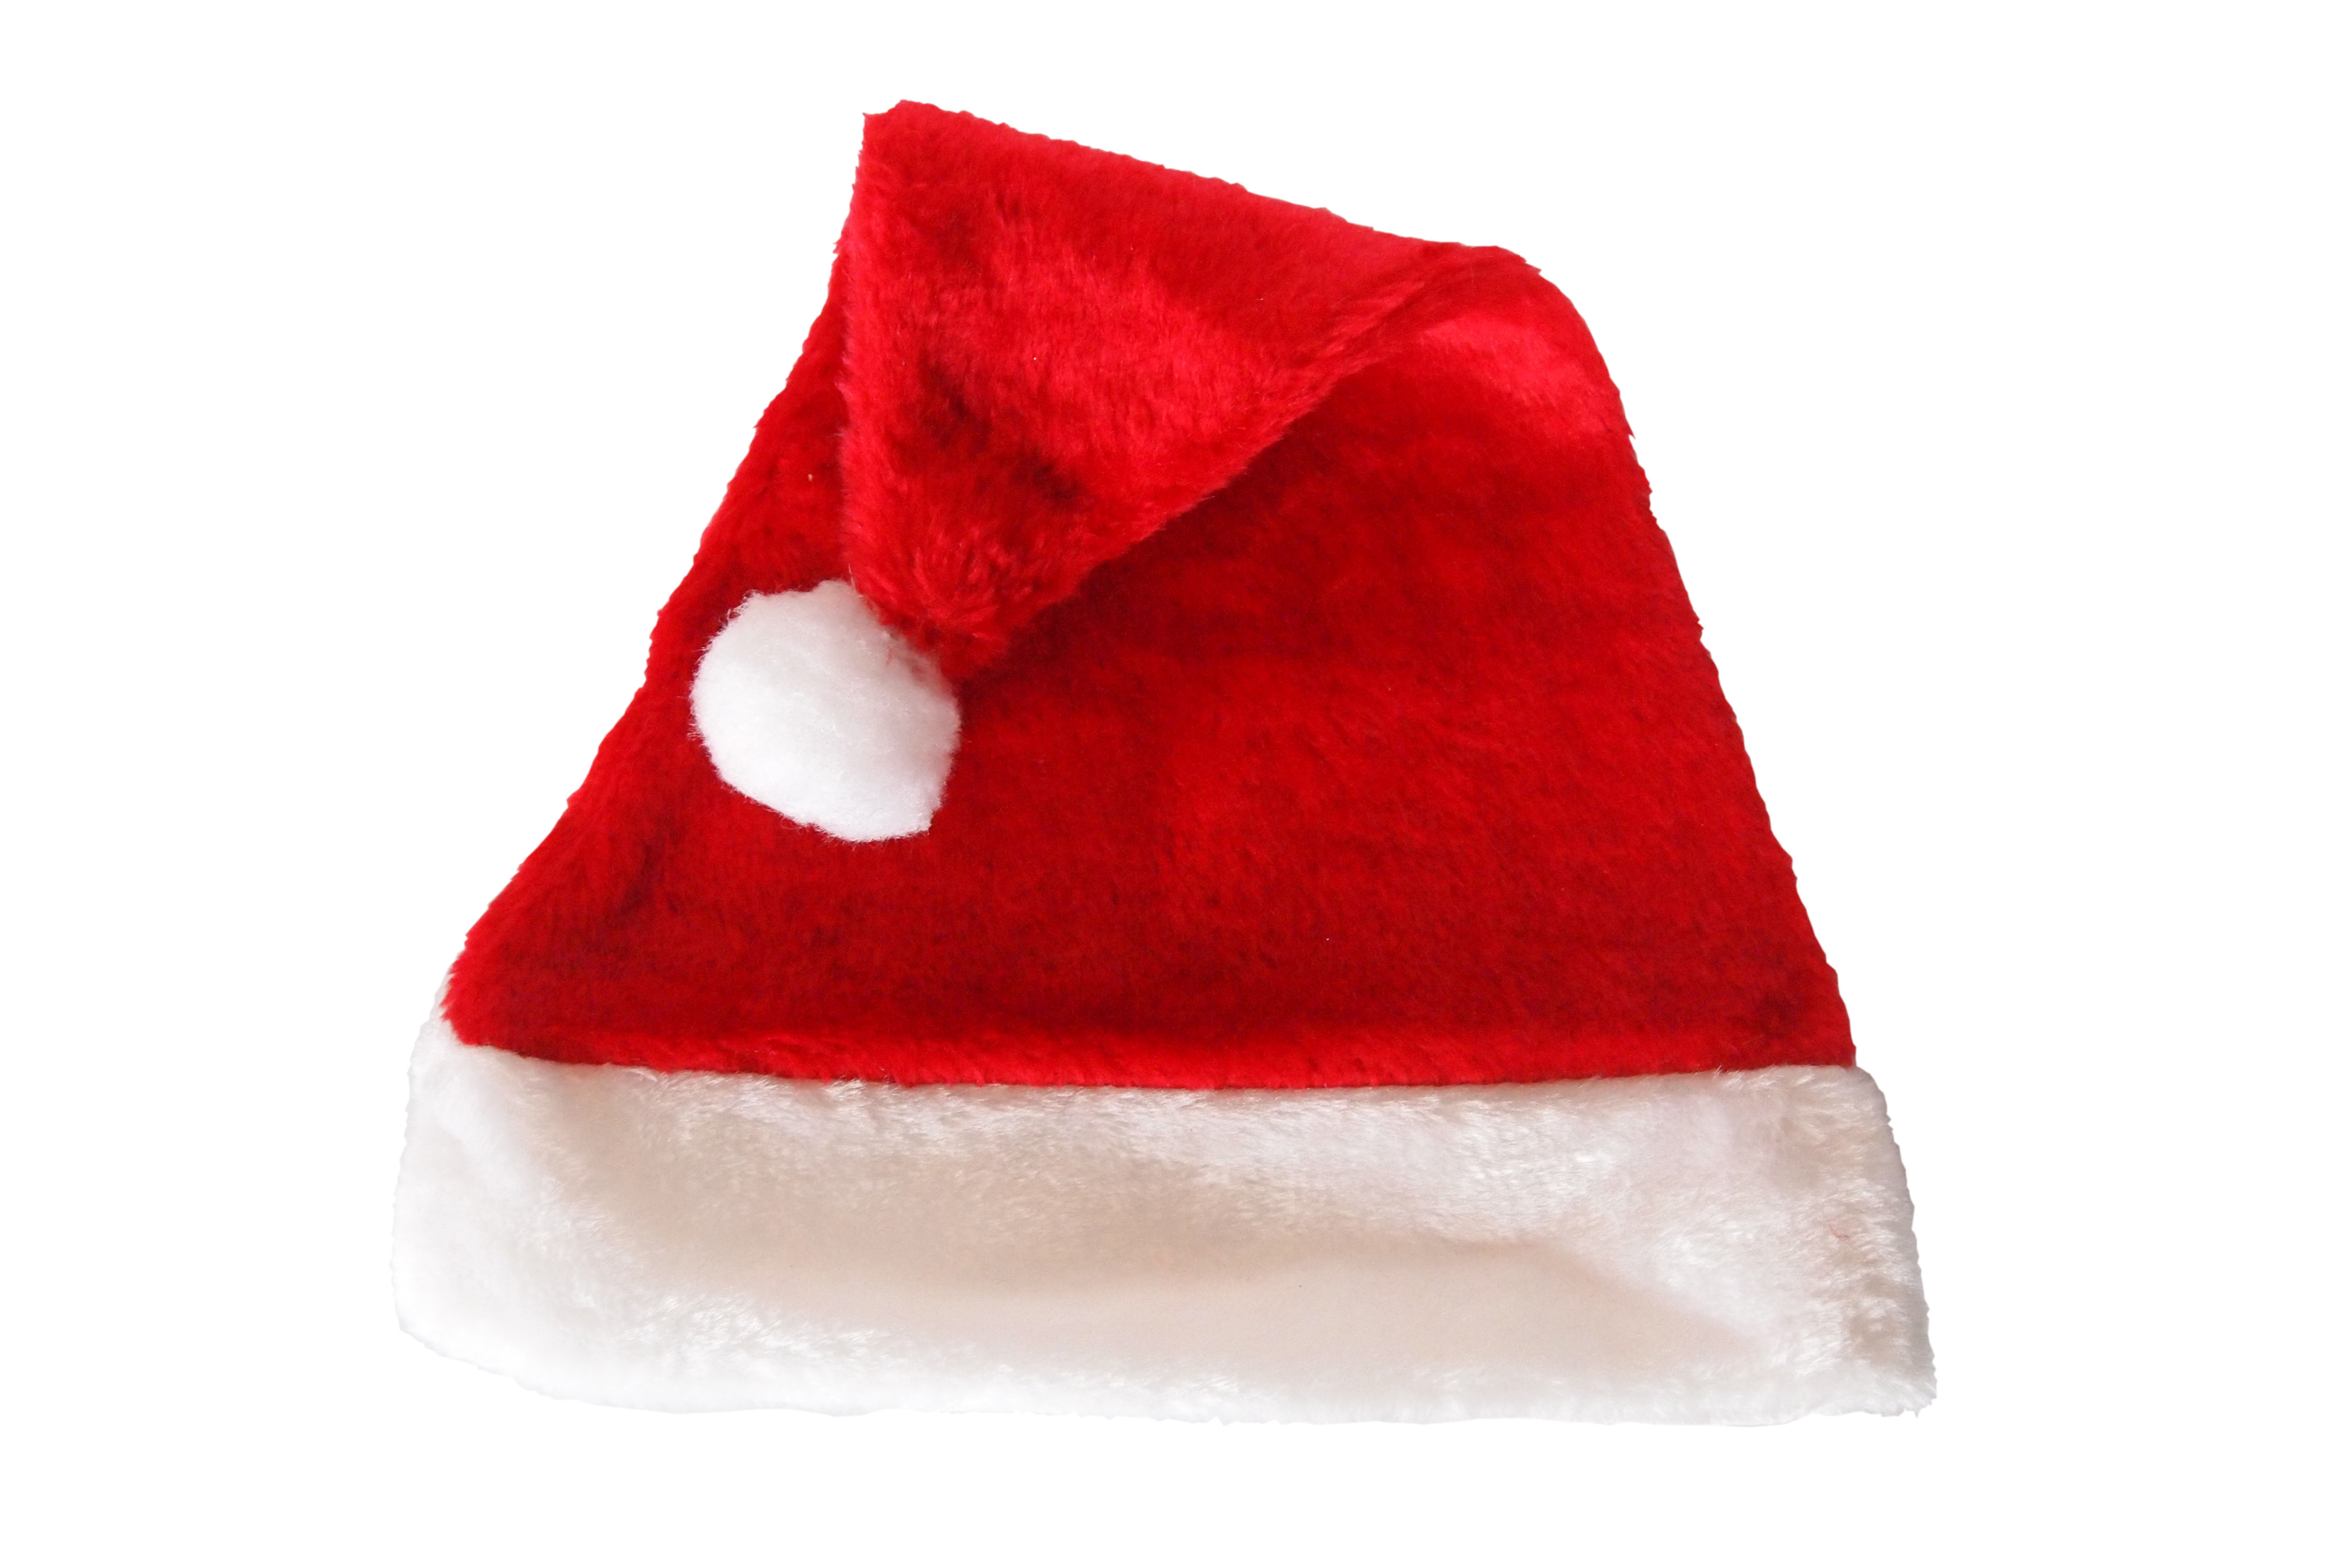 Santa Claus Hat Folded | No cost royalty free stock